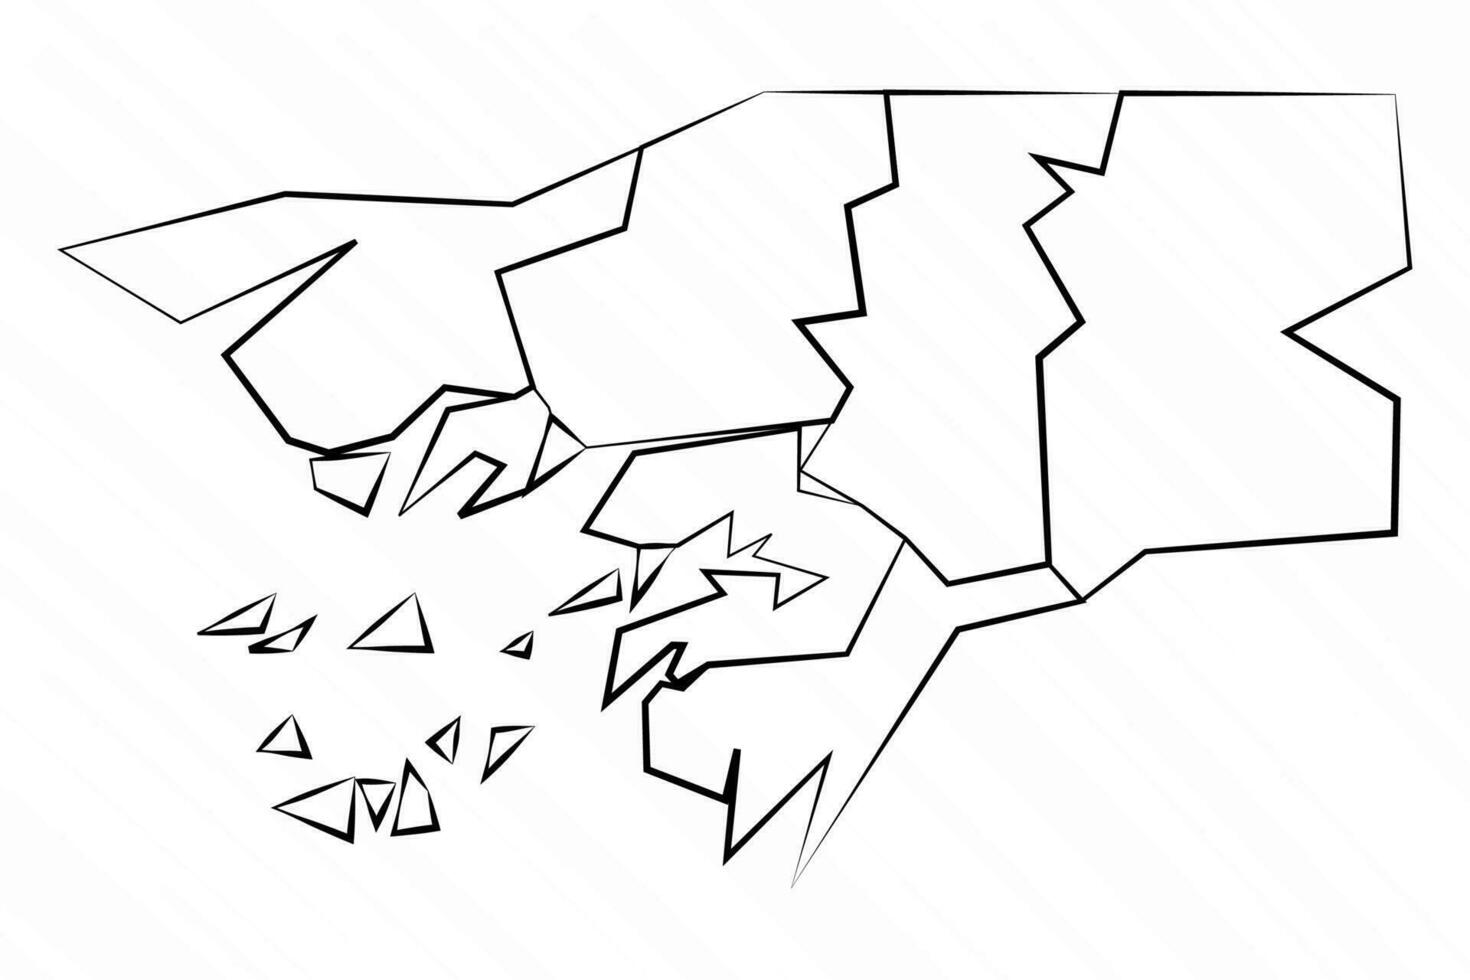 Hand Drawn Guinea Bissau Map Illustration vector